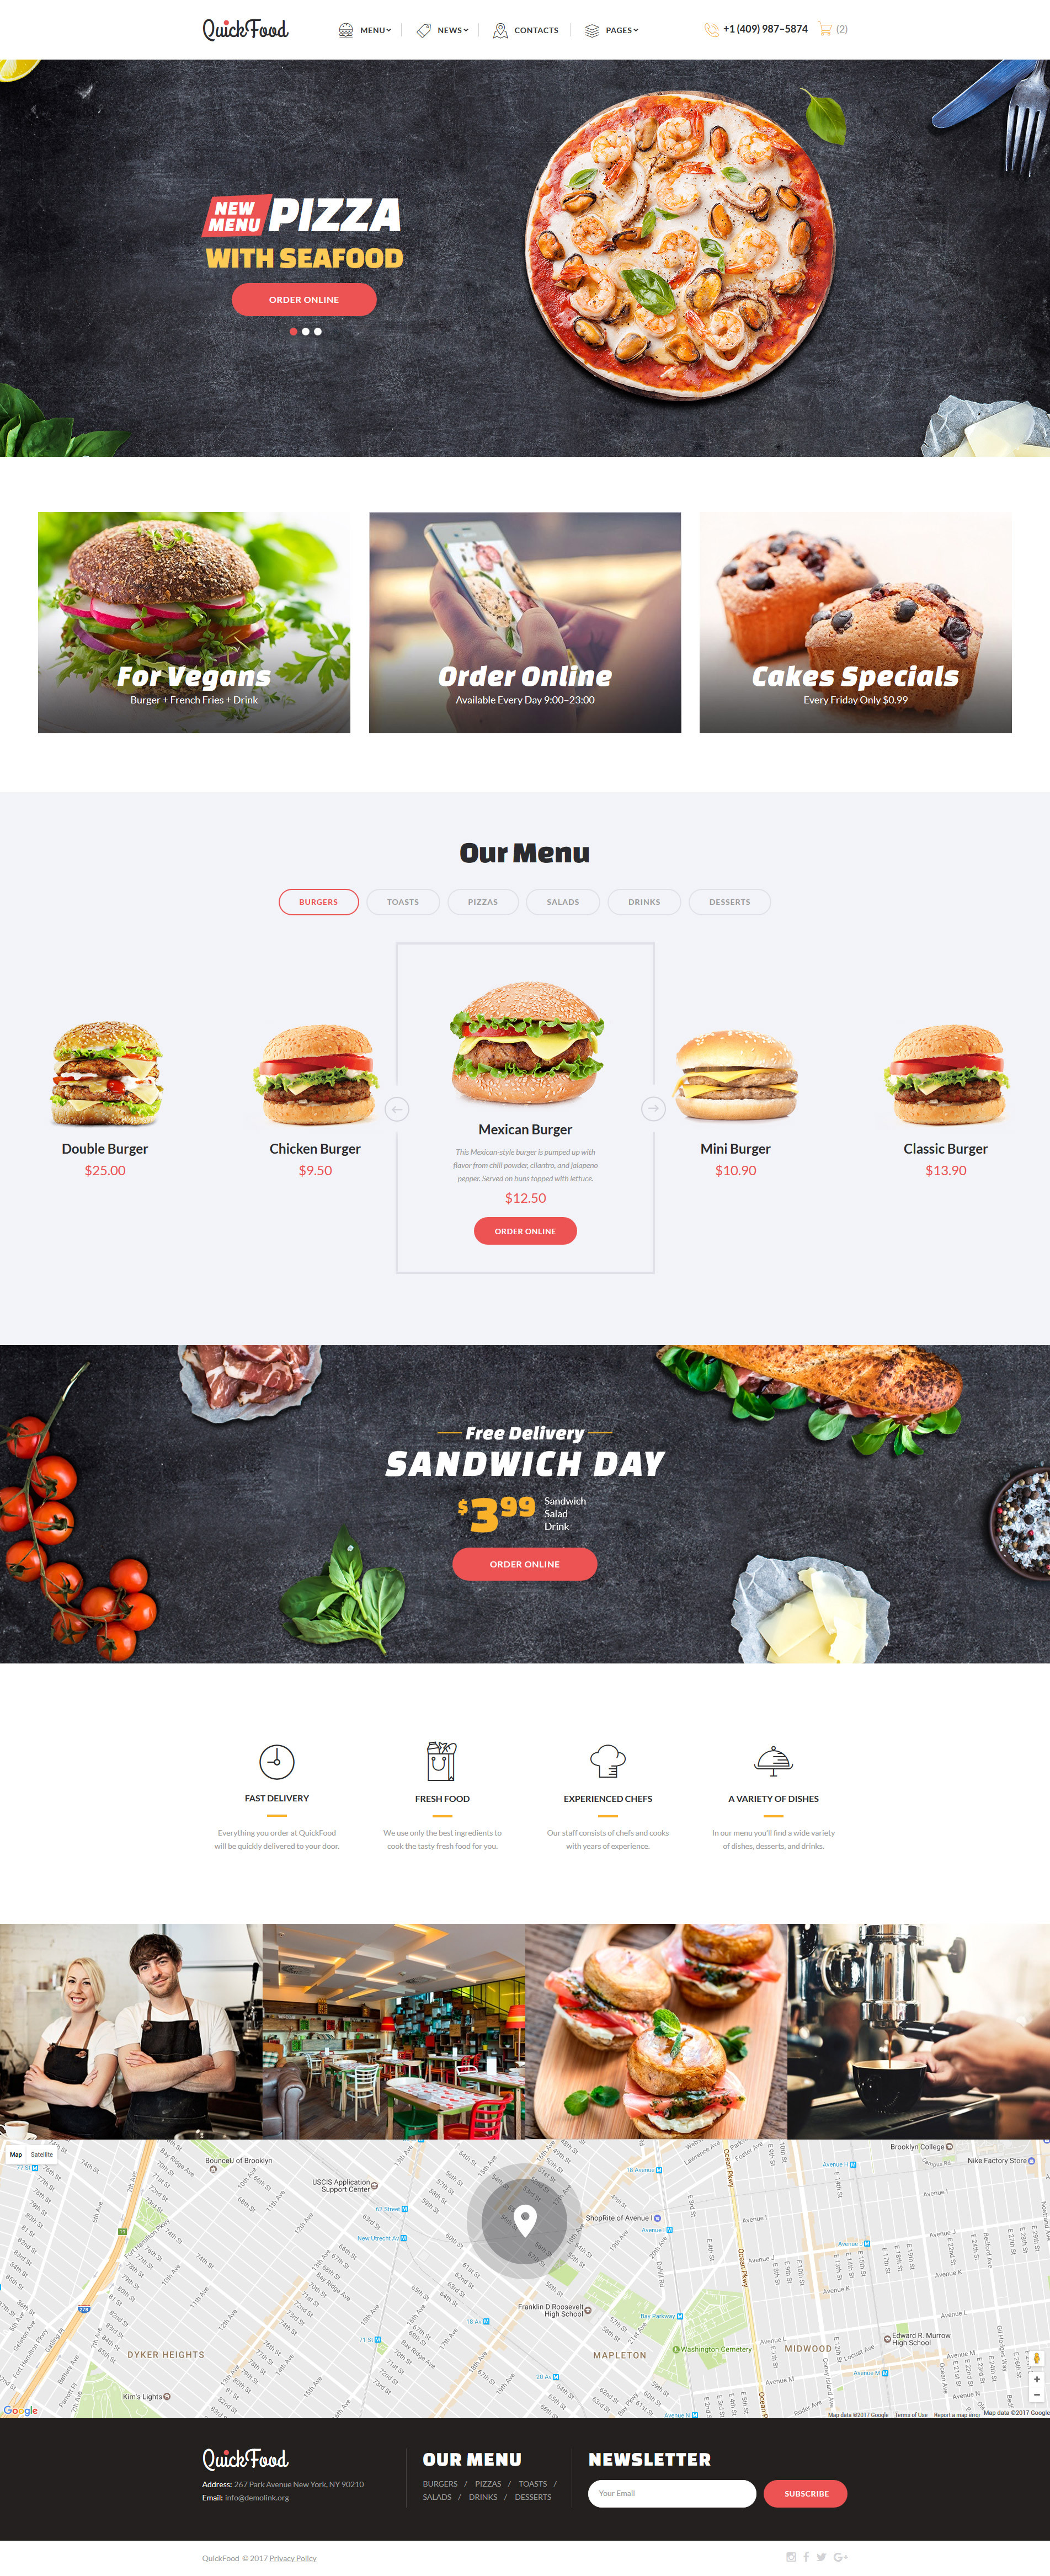 Quick food fast food restaurant responsive multipage website template 61177 original